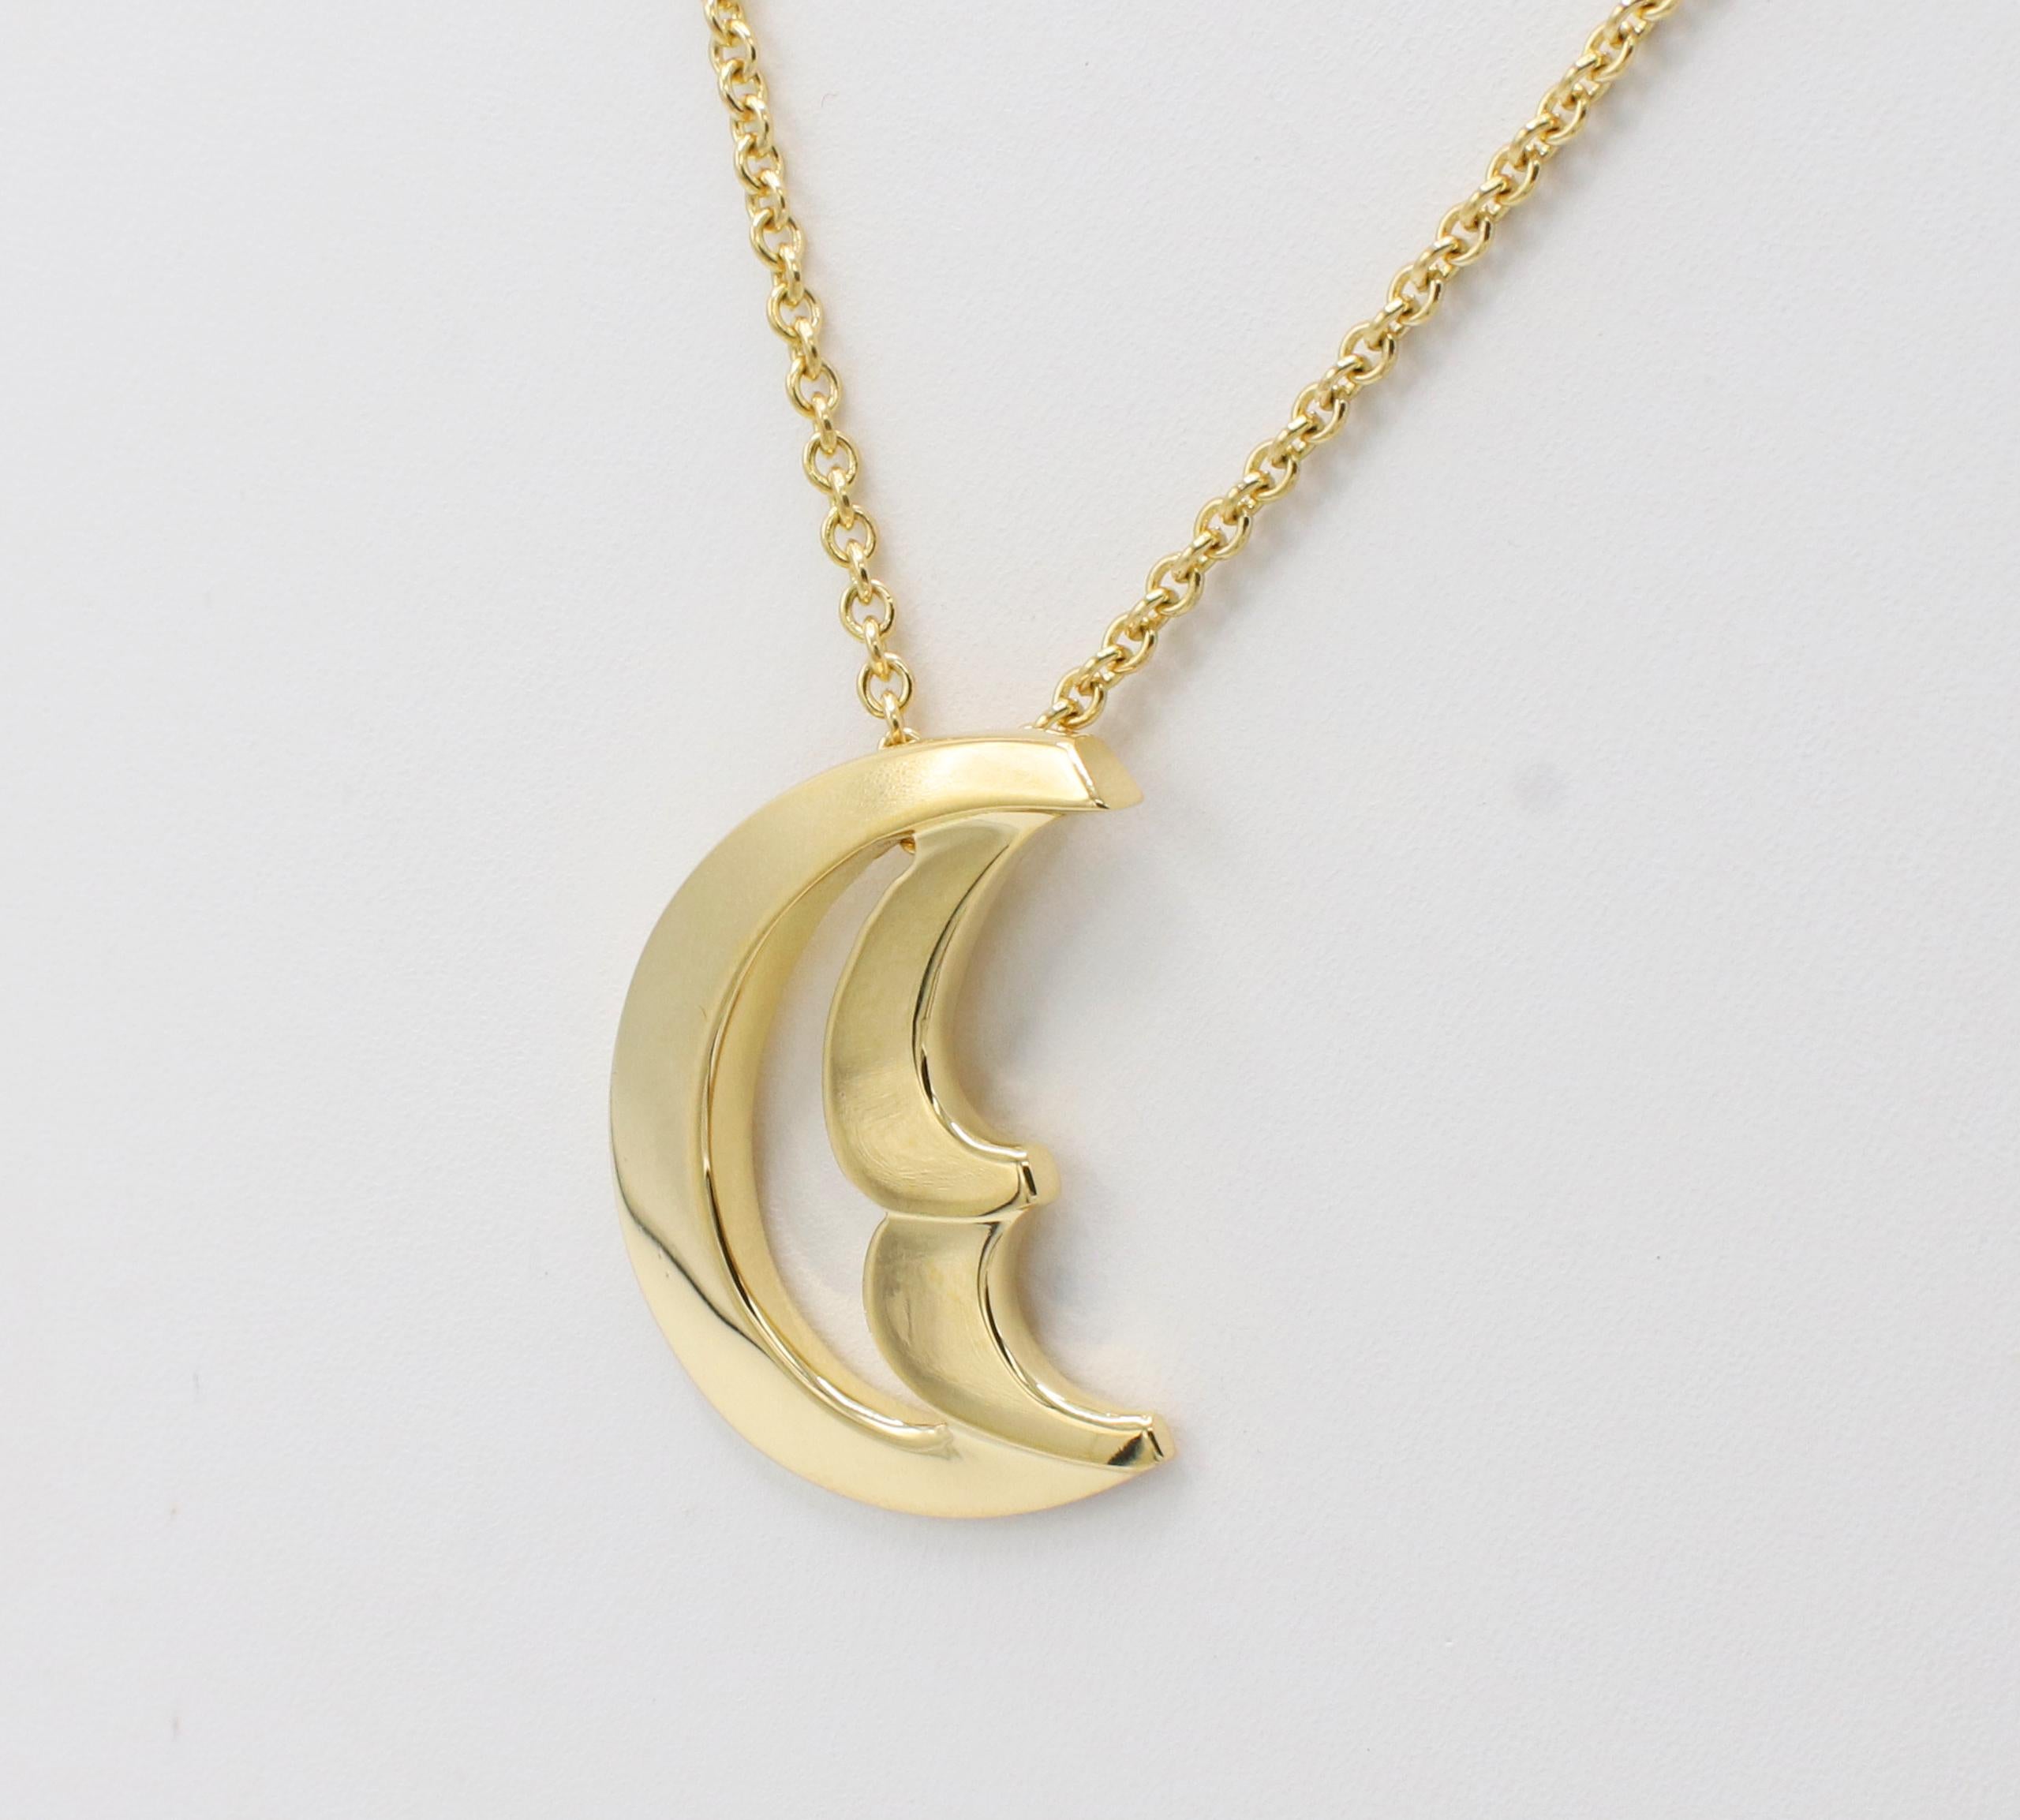 tiffany moon pendant